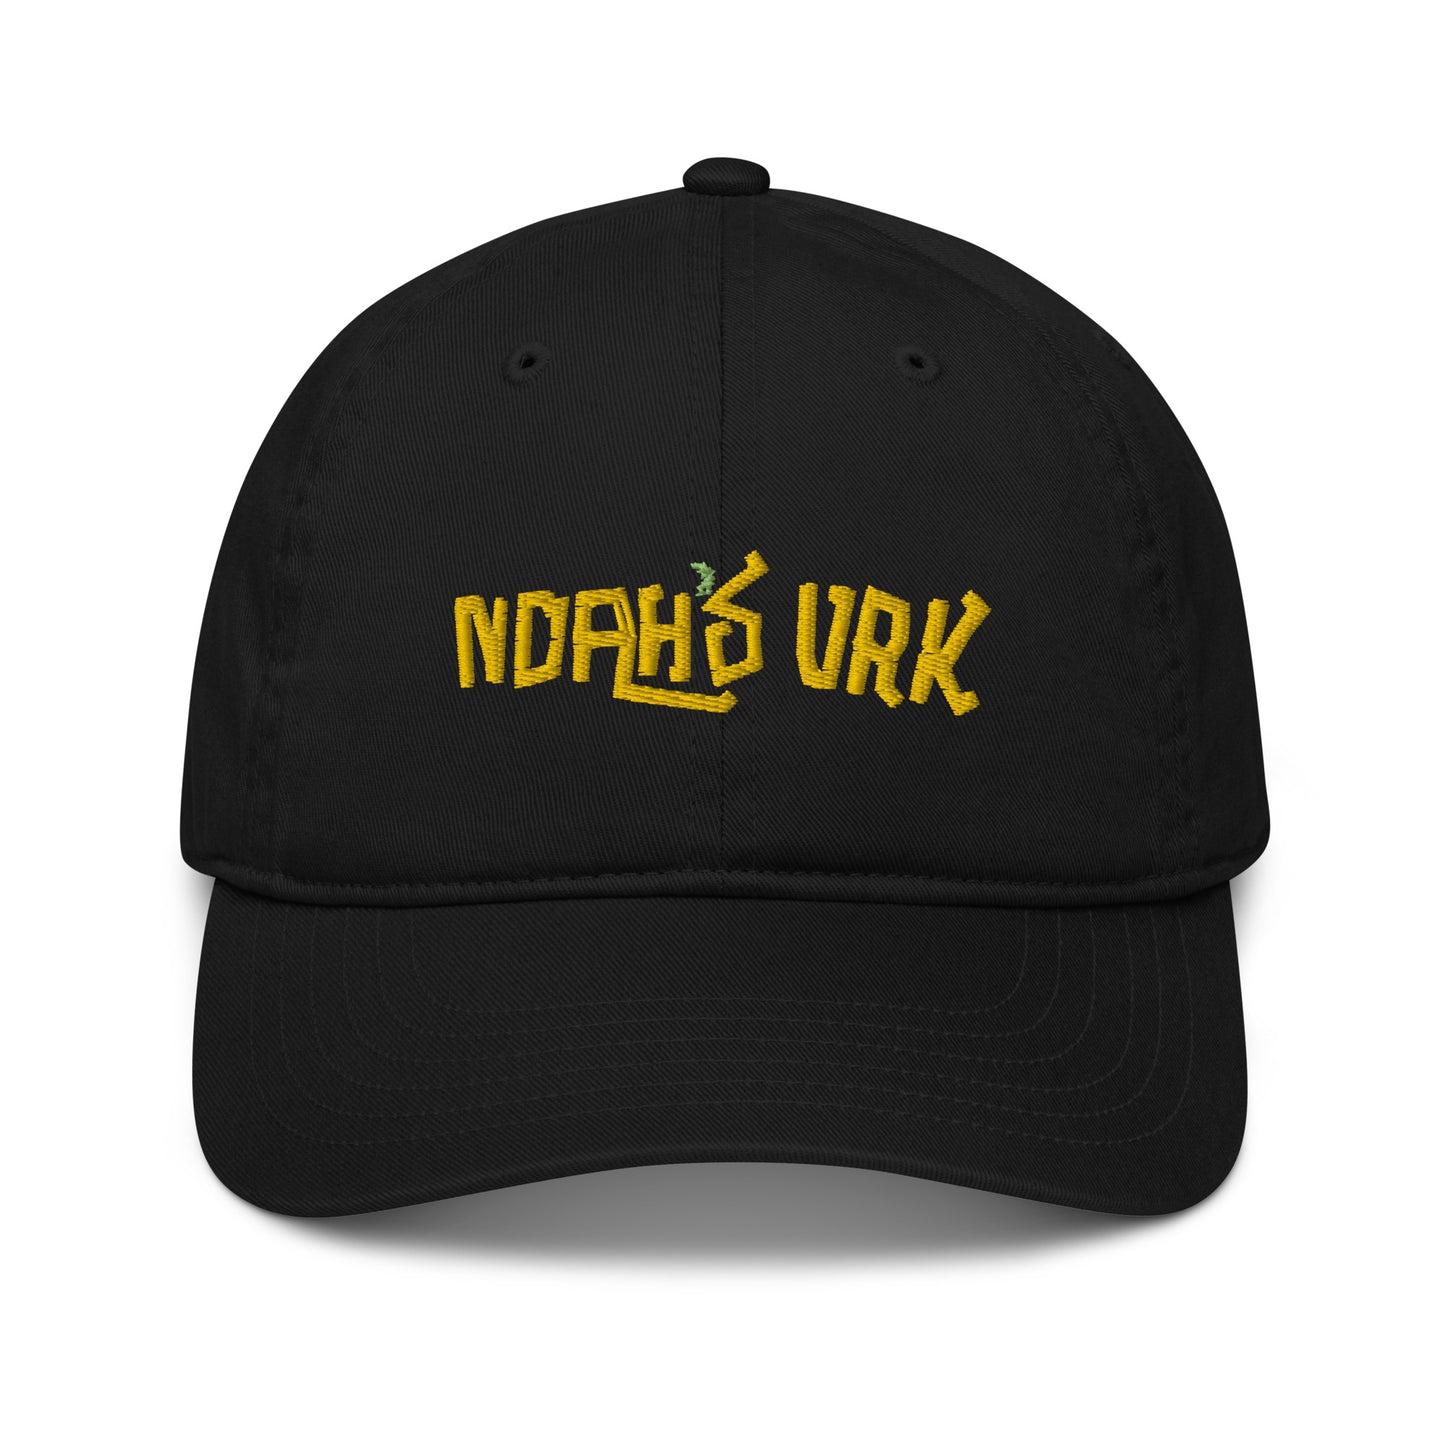 Noah's VRK Organic dad hat